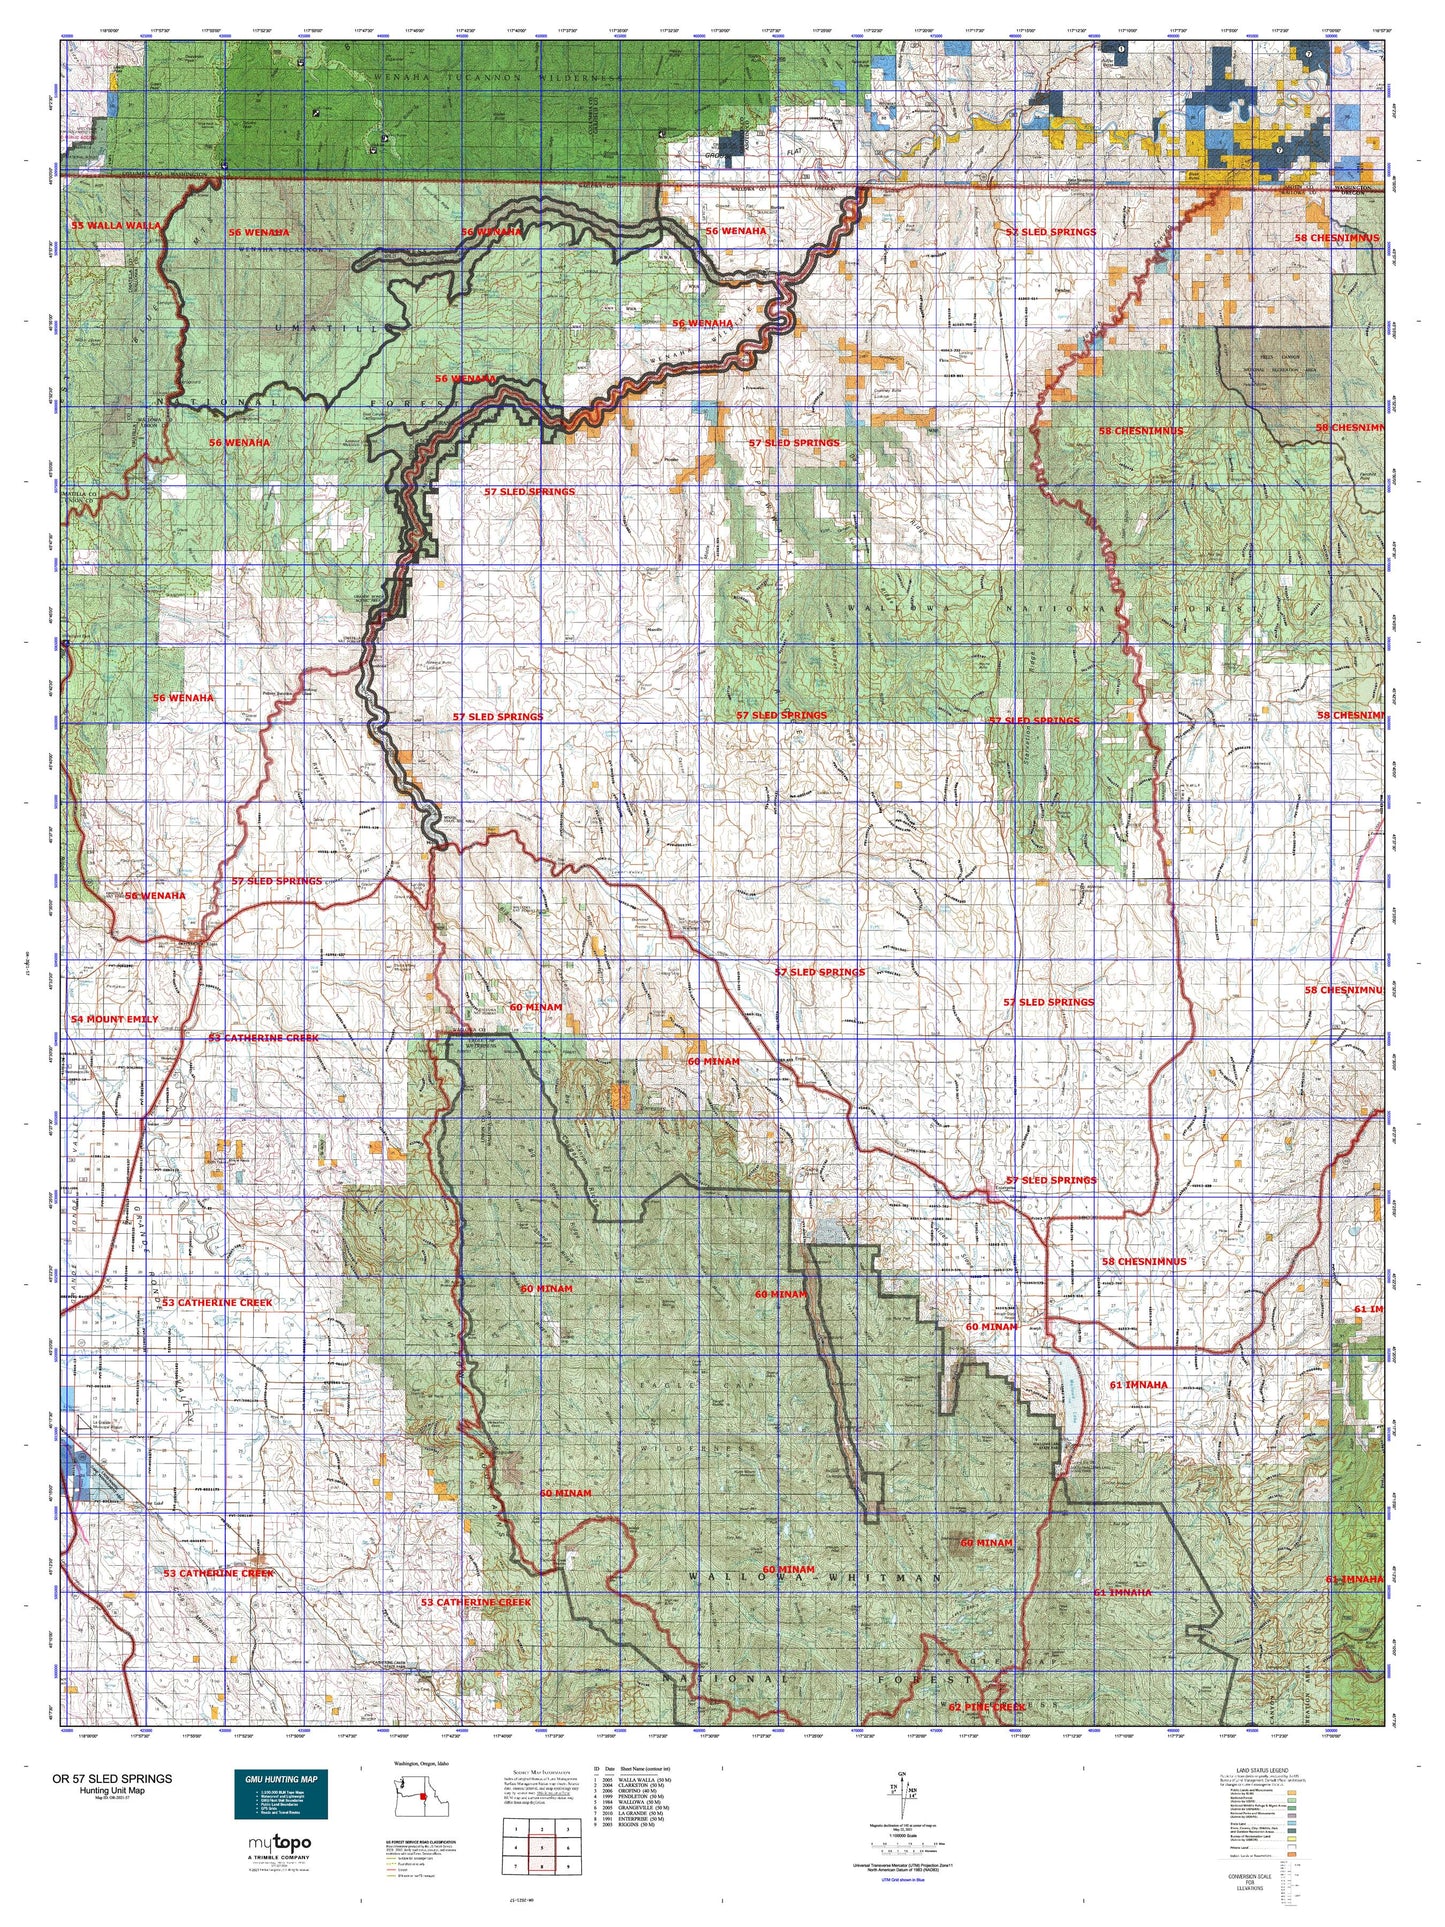 Oregon 57 Sled Springs Map Image